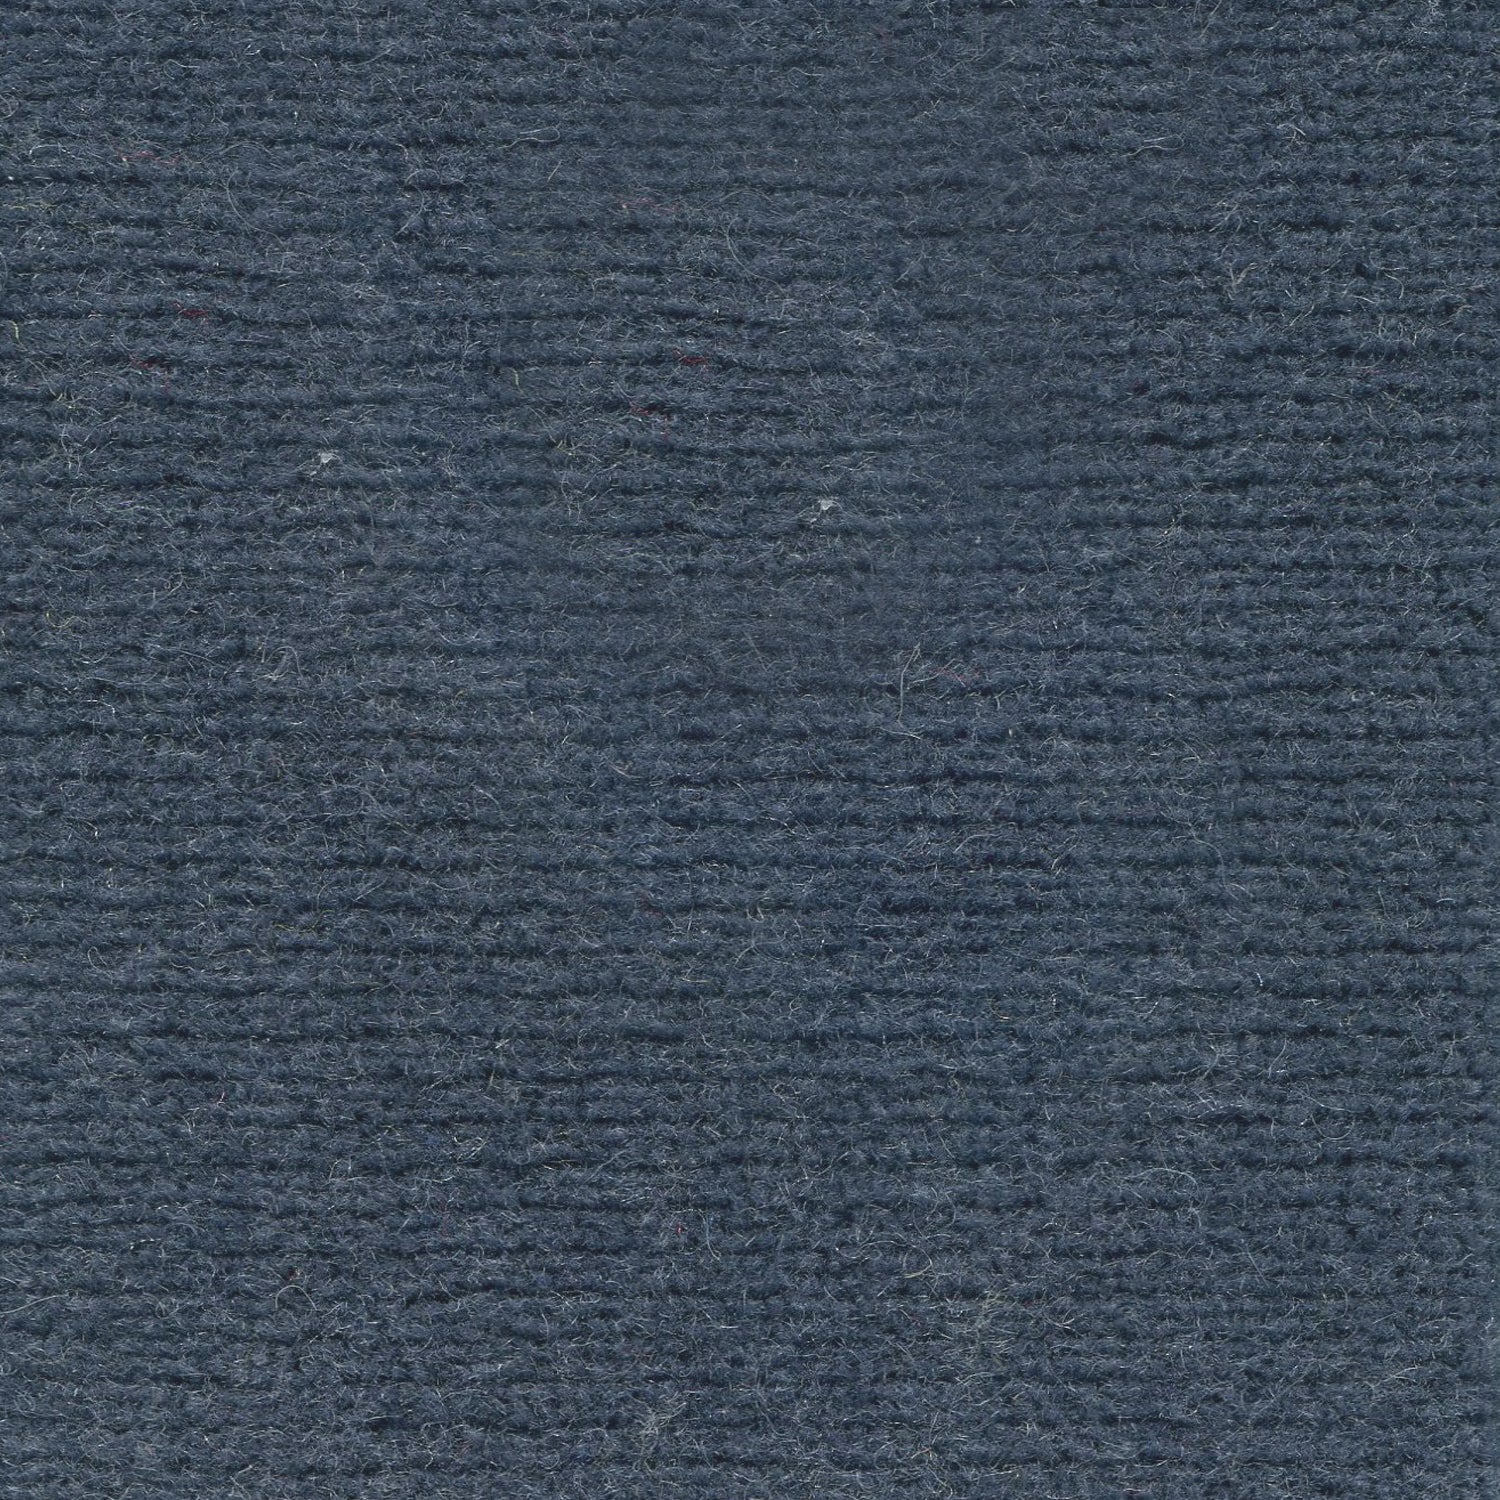 Wool broadloom carpet swatch in a high-pile weave in a solid navy colorway.